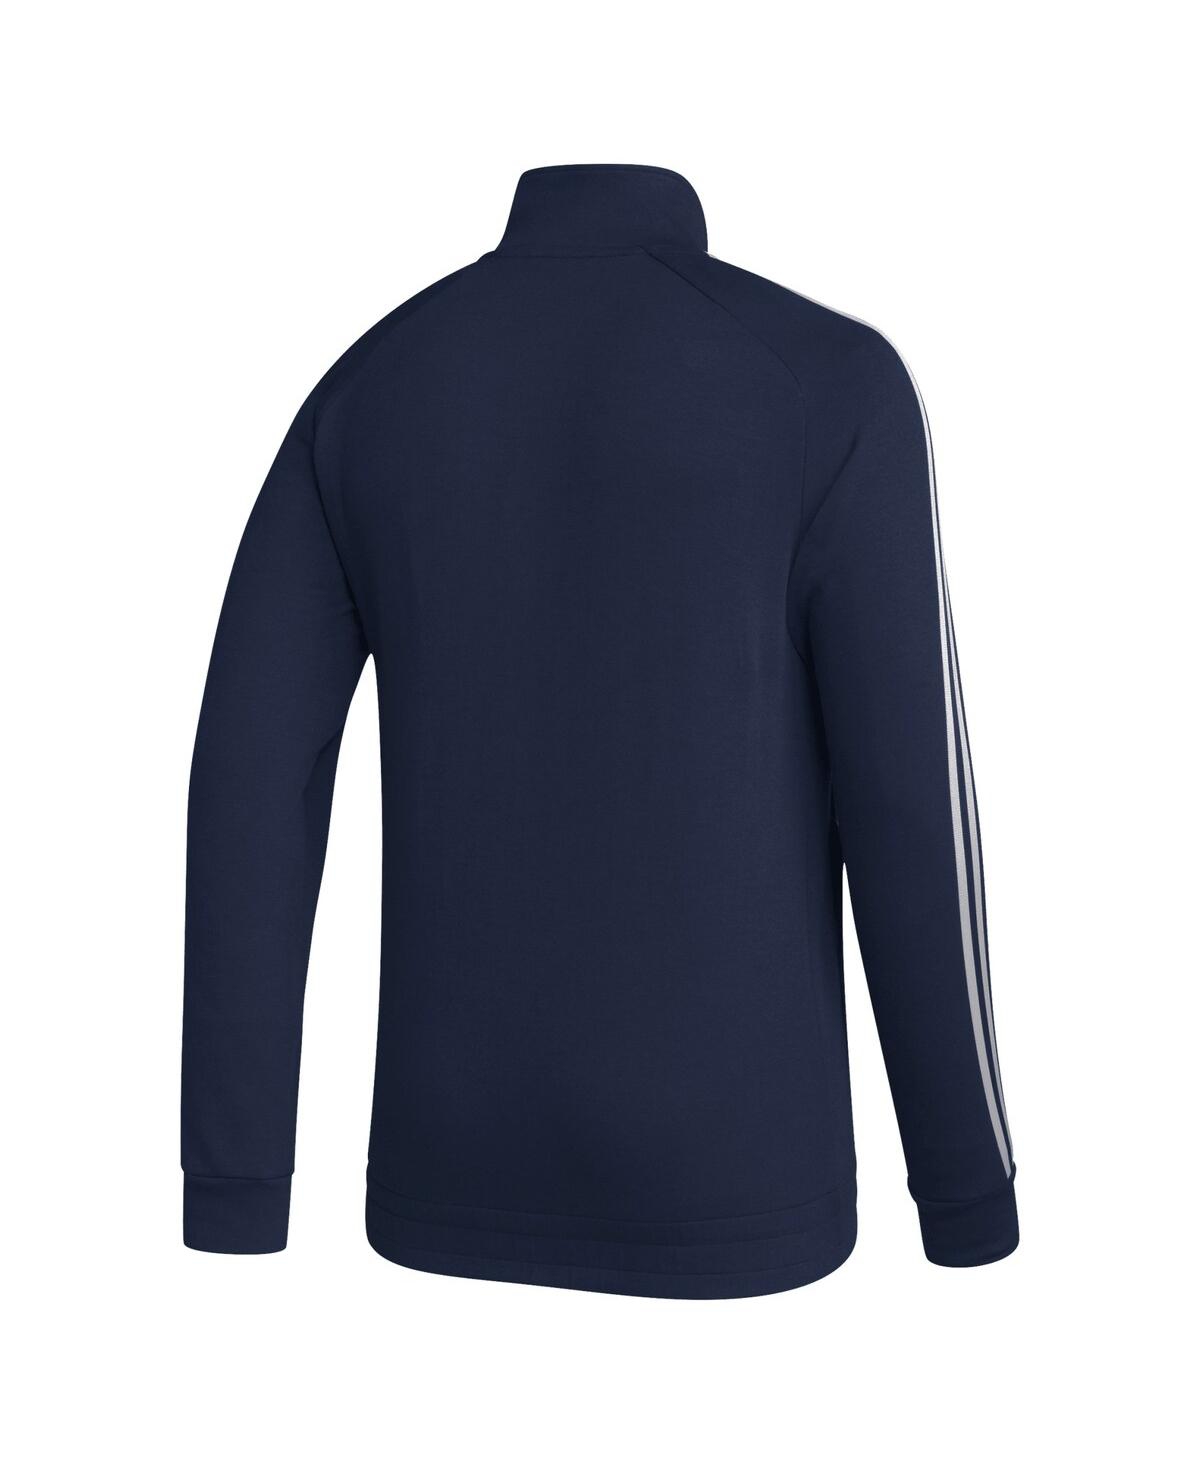 Shop Adidas Originals Men's Adidas Deep Sea Blue Seattle Kraken Raglan Full-zip Track Jacket